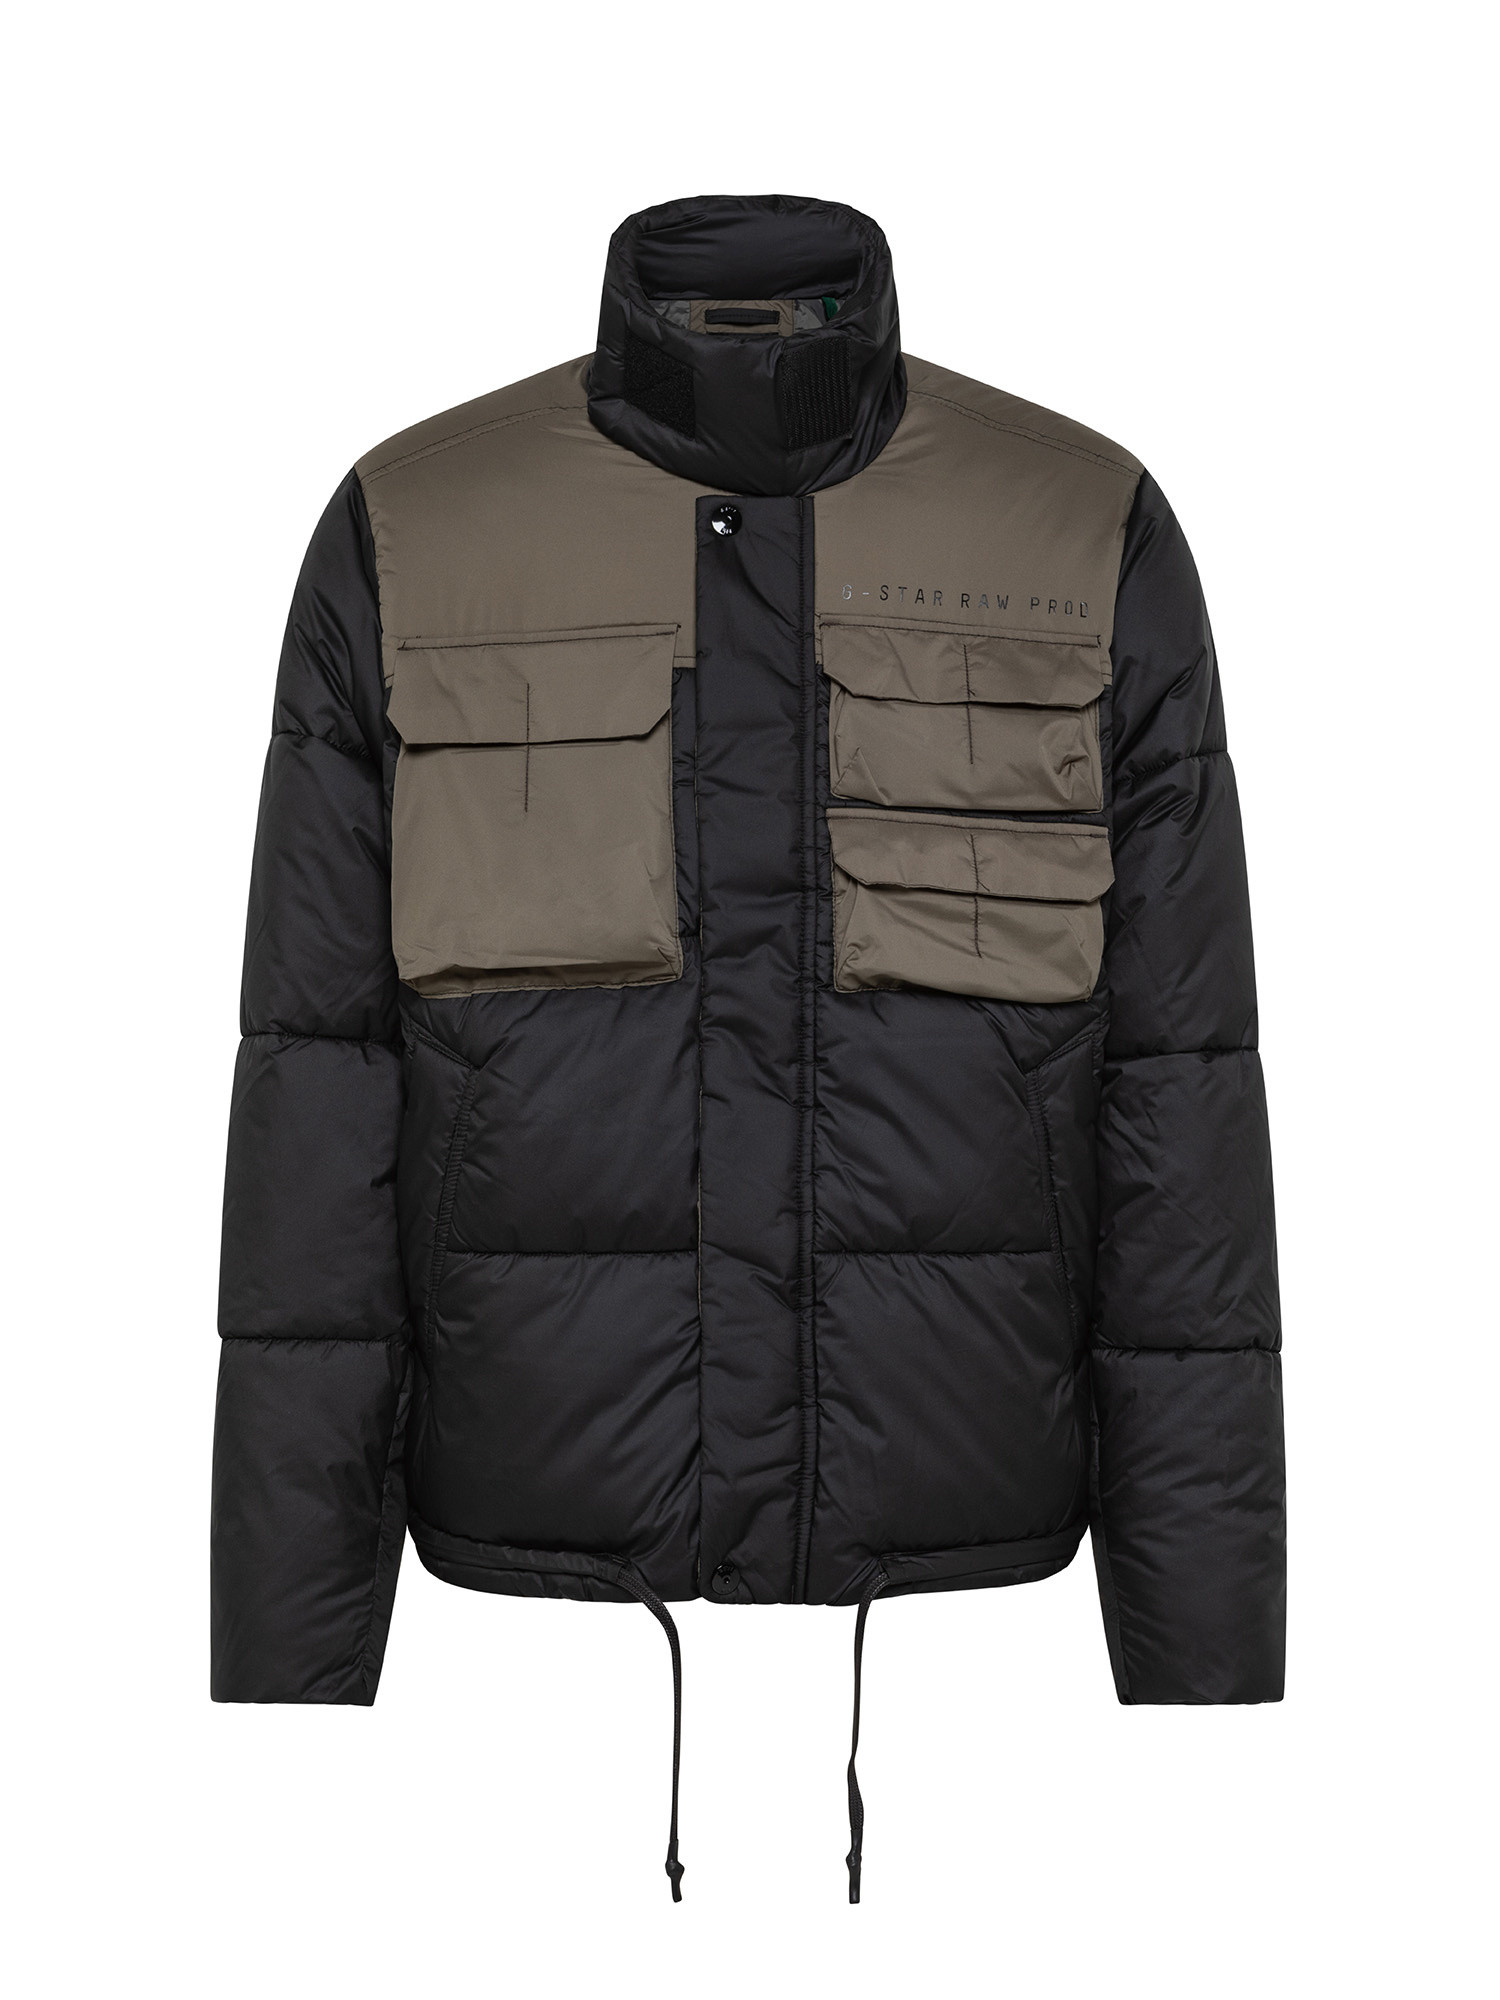 G-Star - Down jacket with pockets, Black, large image number 0